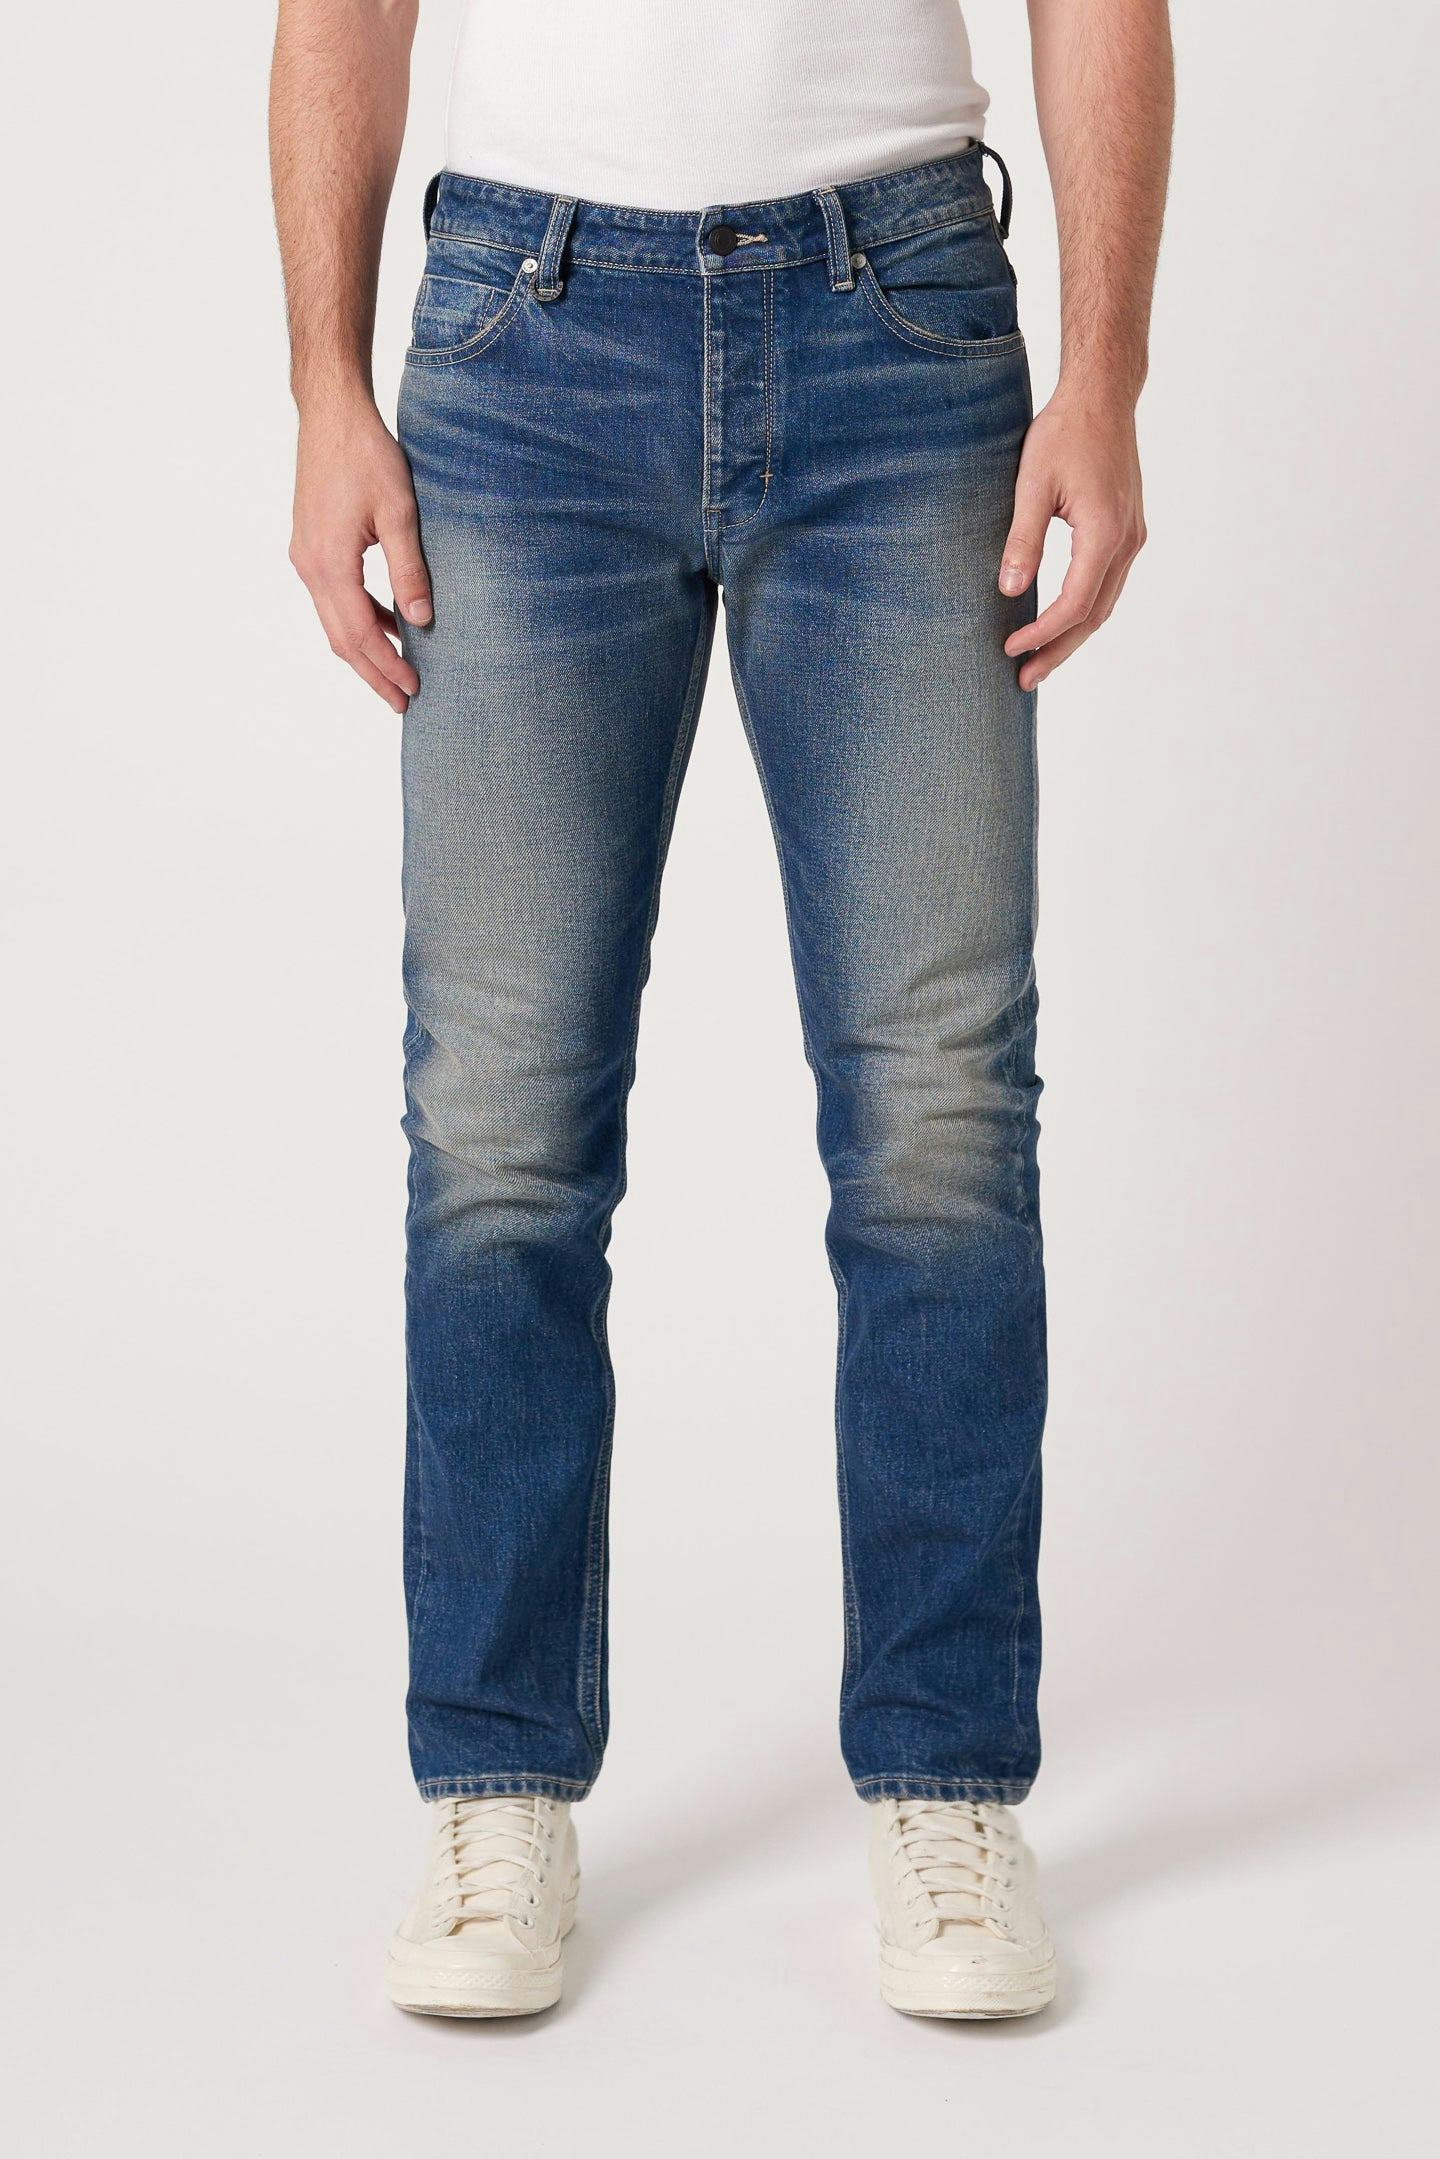 Ray Straight - Montage Neuw mid darkblue mens-jeans 